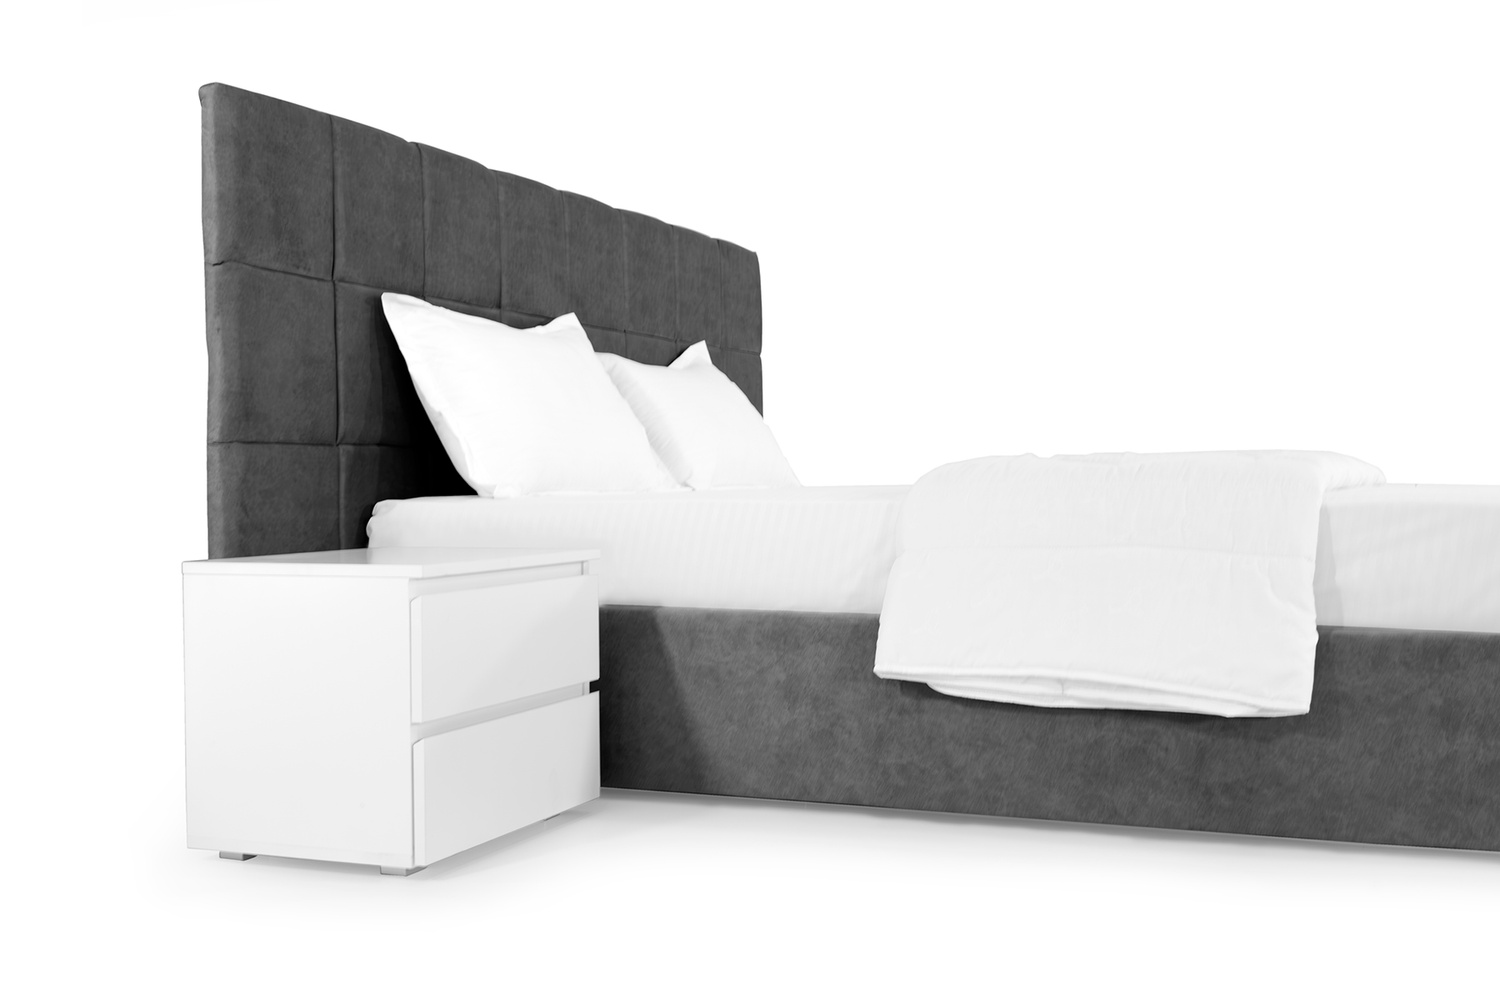 Кровать Гортензия 140х200 (Темно-серый, ламели, без подъемного механизма) IMI grtnz140x200tsb фото